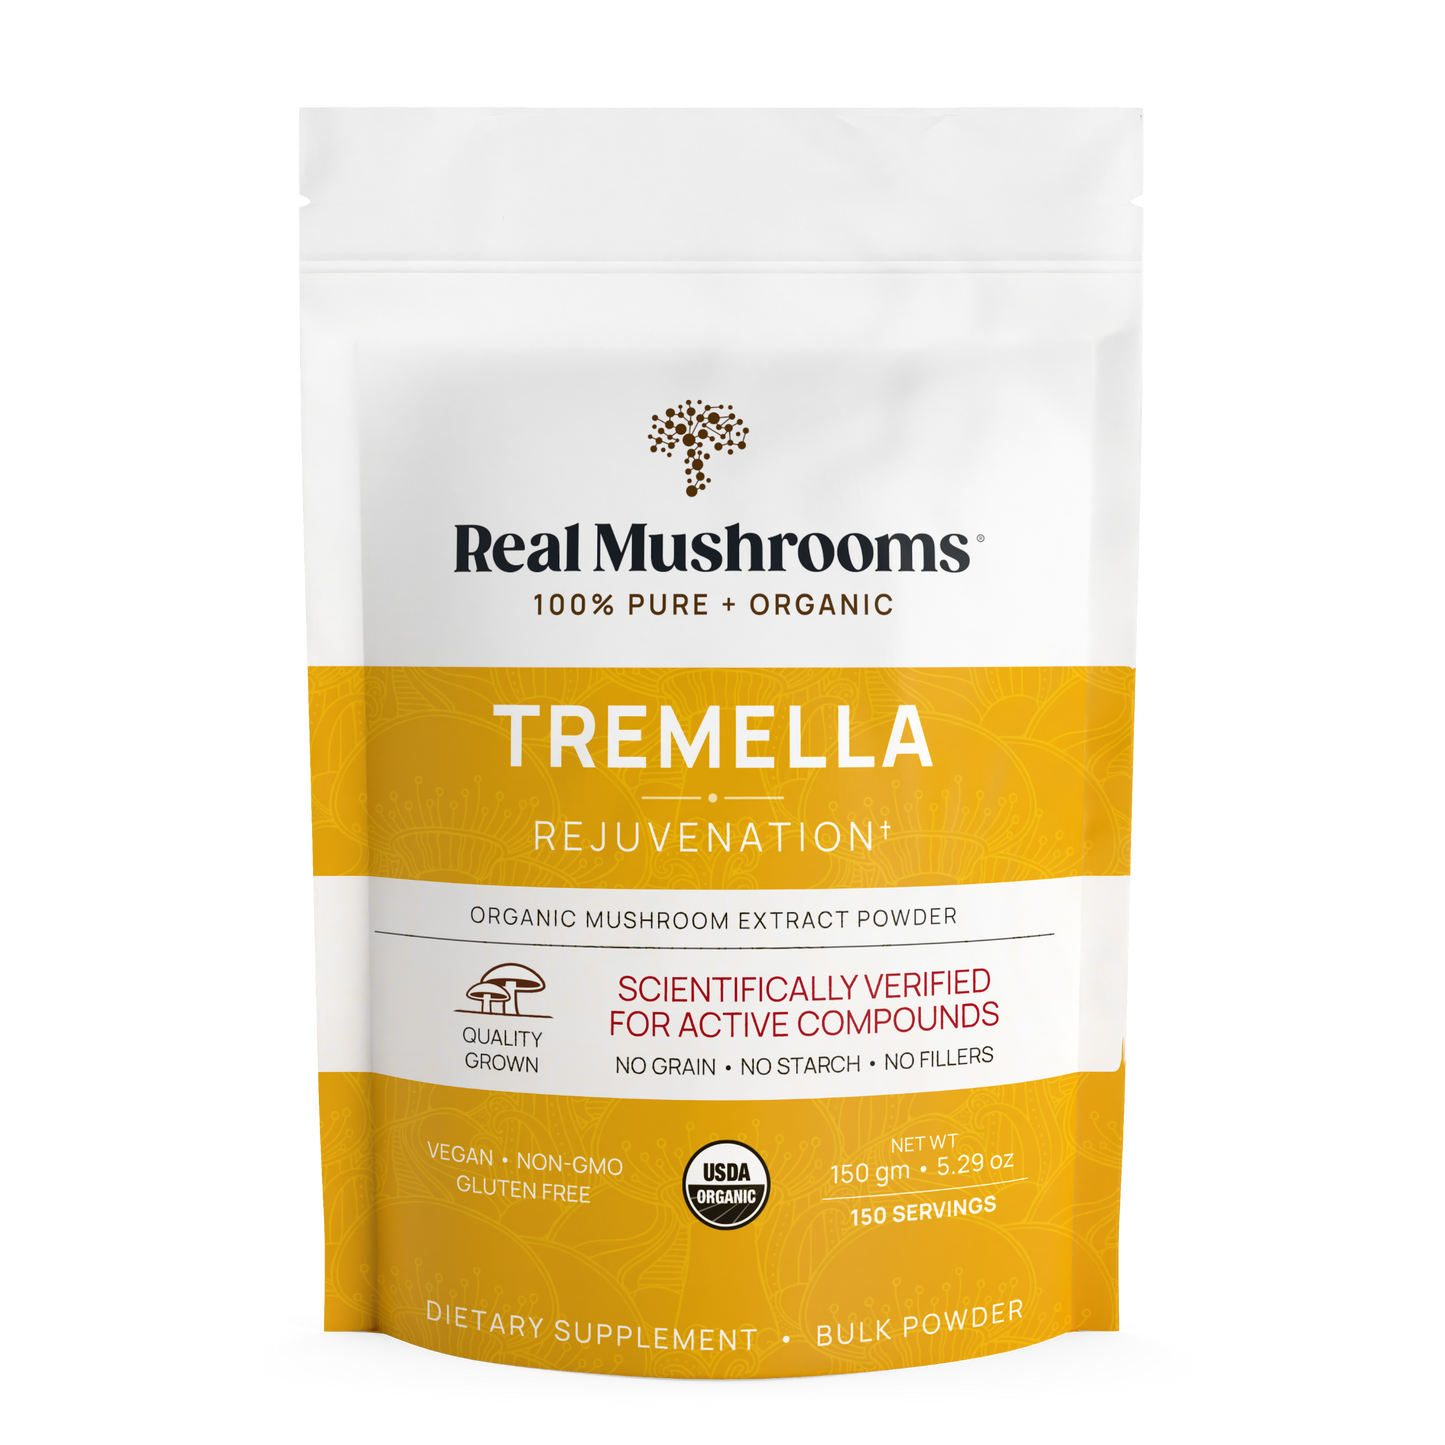 Real Mushrooms Organic Tremella Mushroom Extract Powder for Pets relaxation.